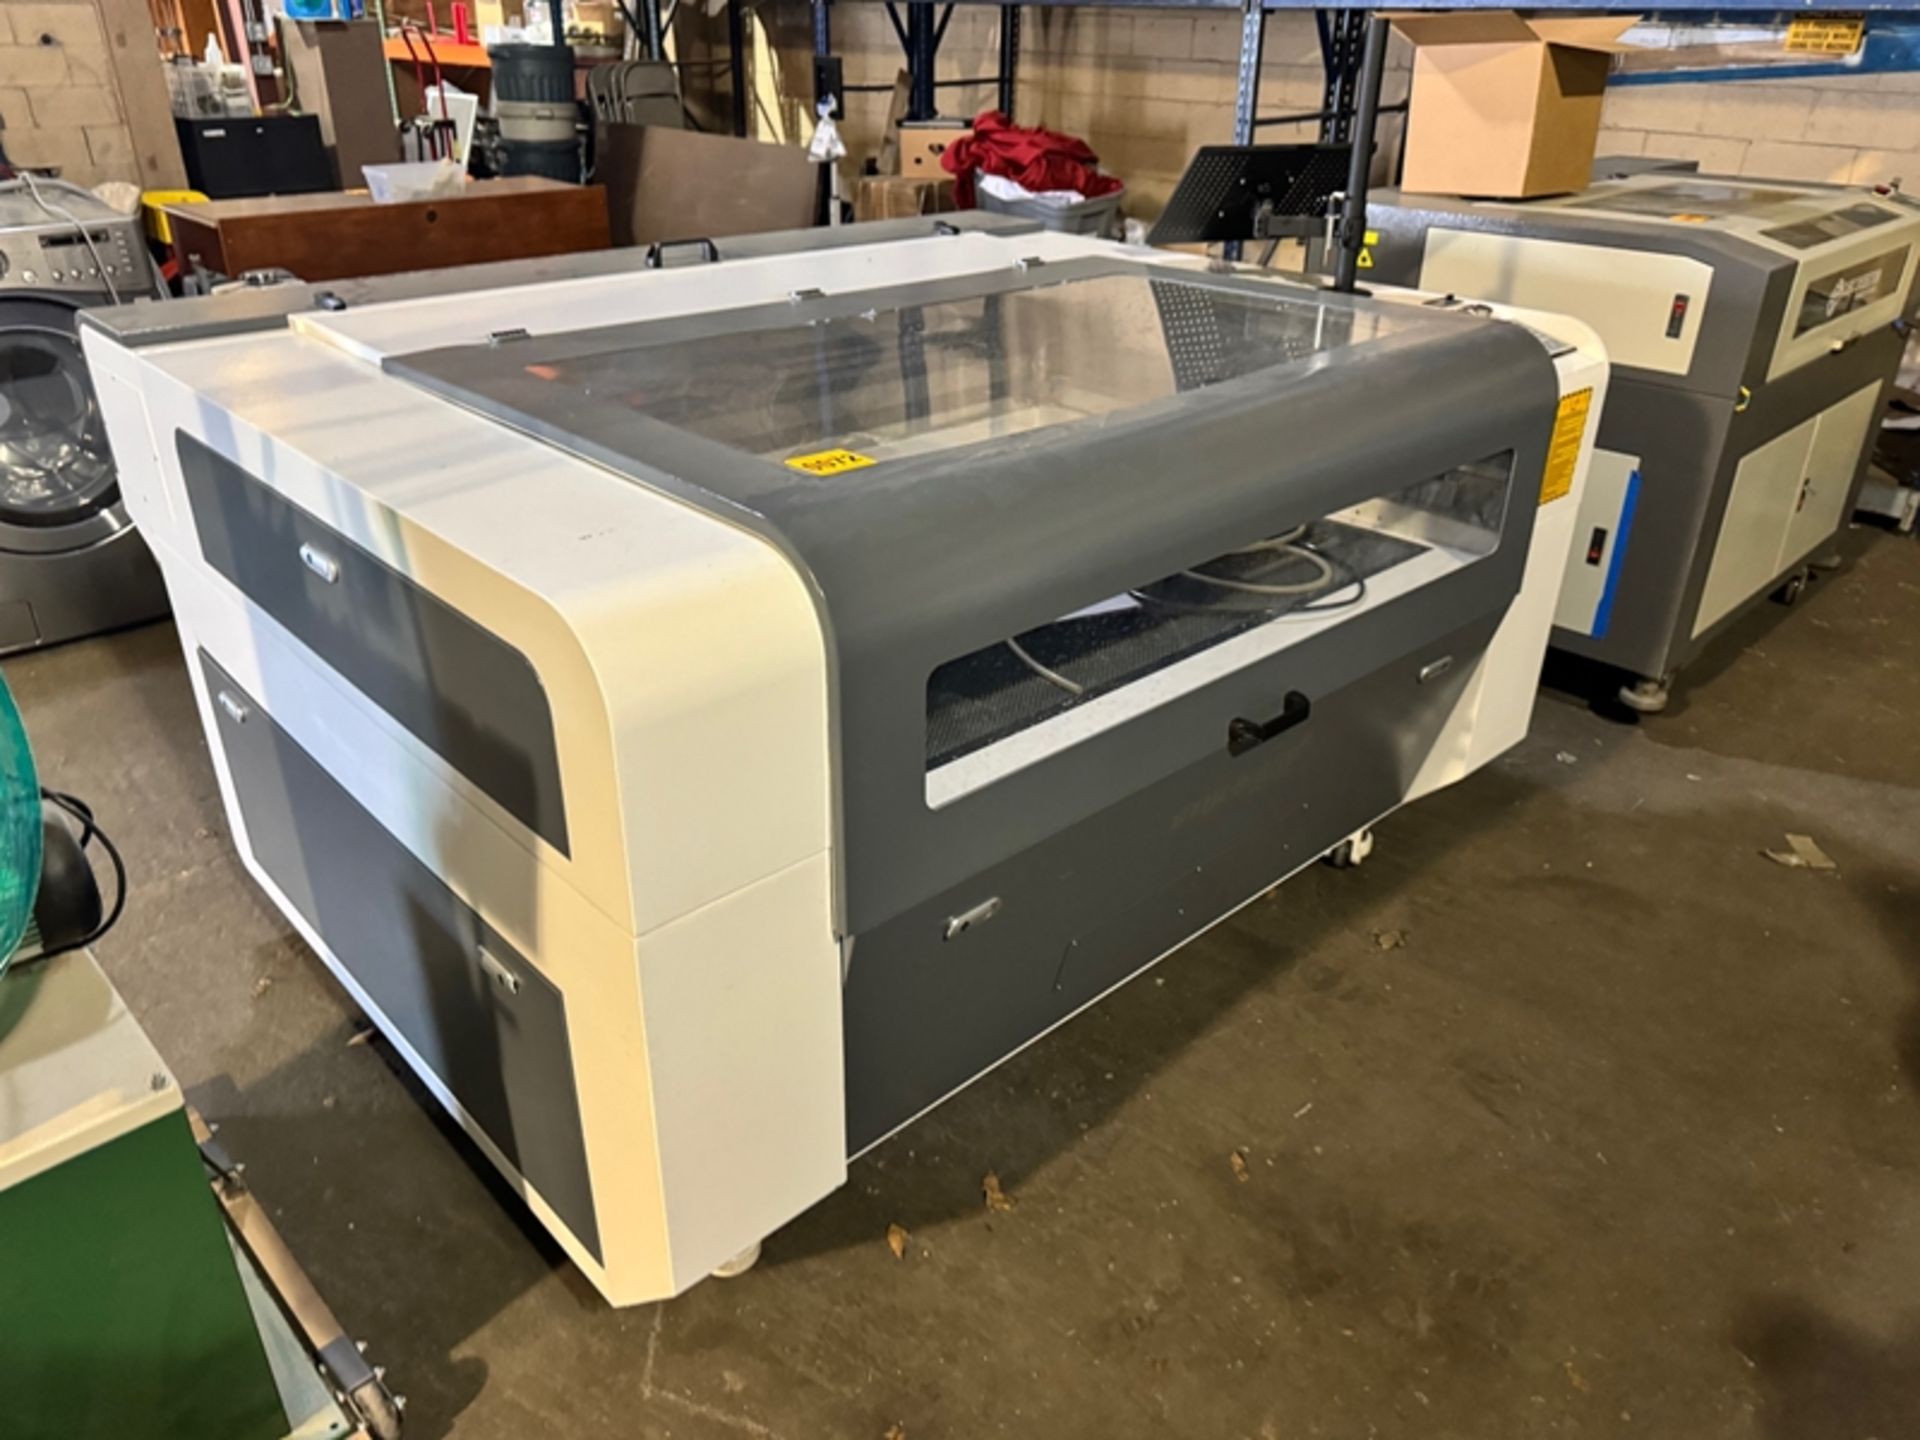 2021 STYLECNC Model STJ1390 110V laser engraving machine approximately 50" x 36" cutting surface